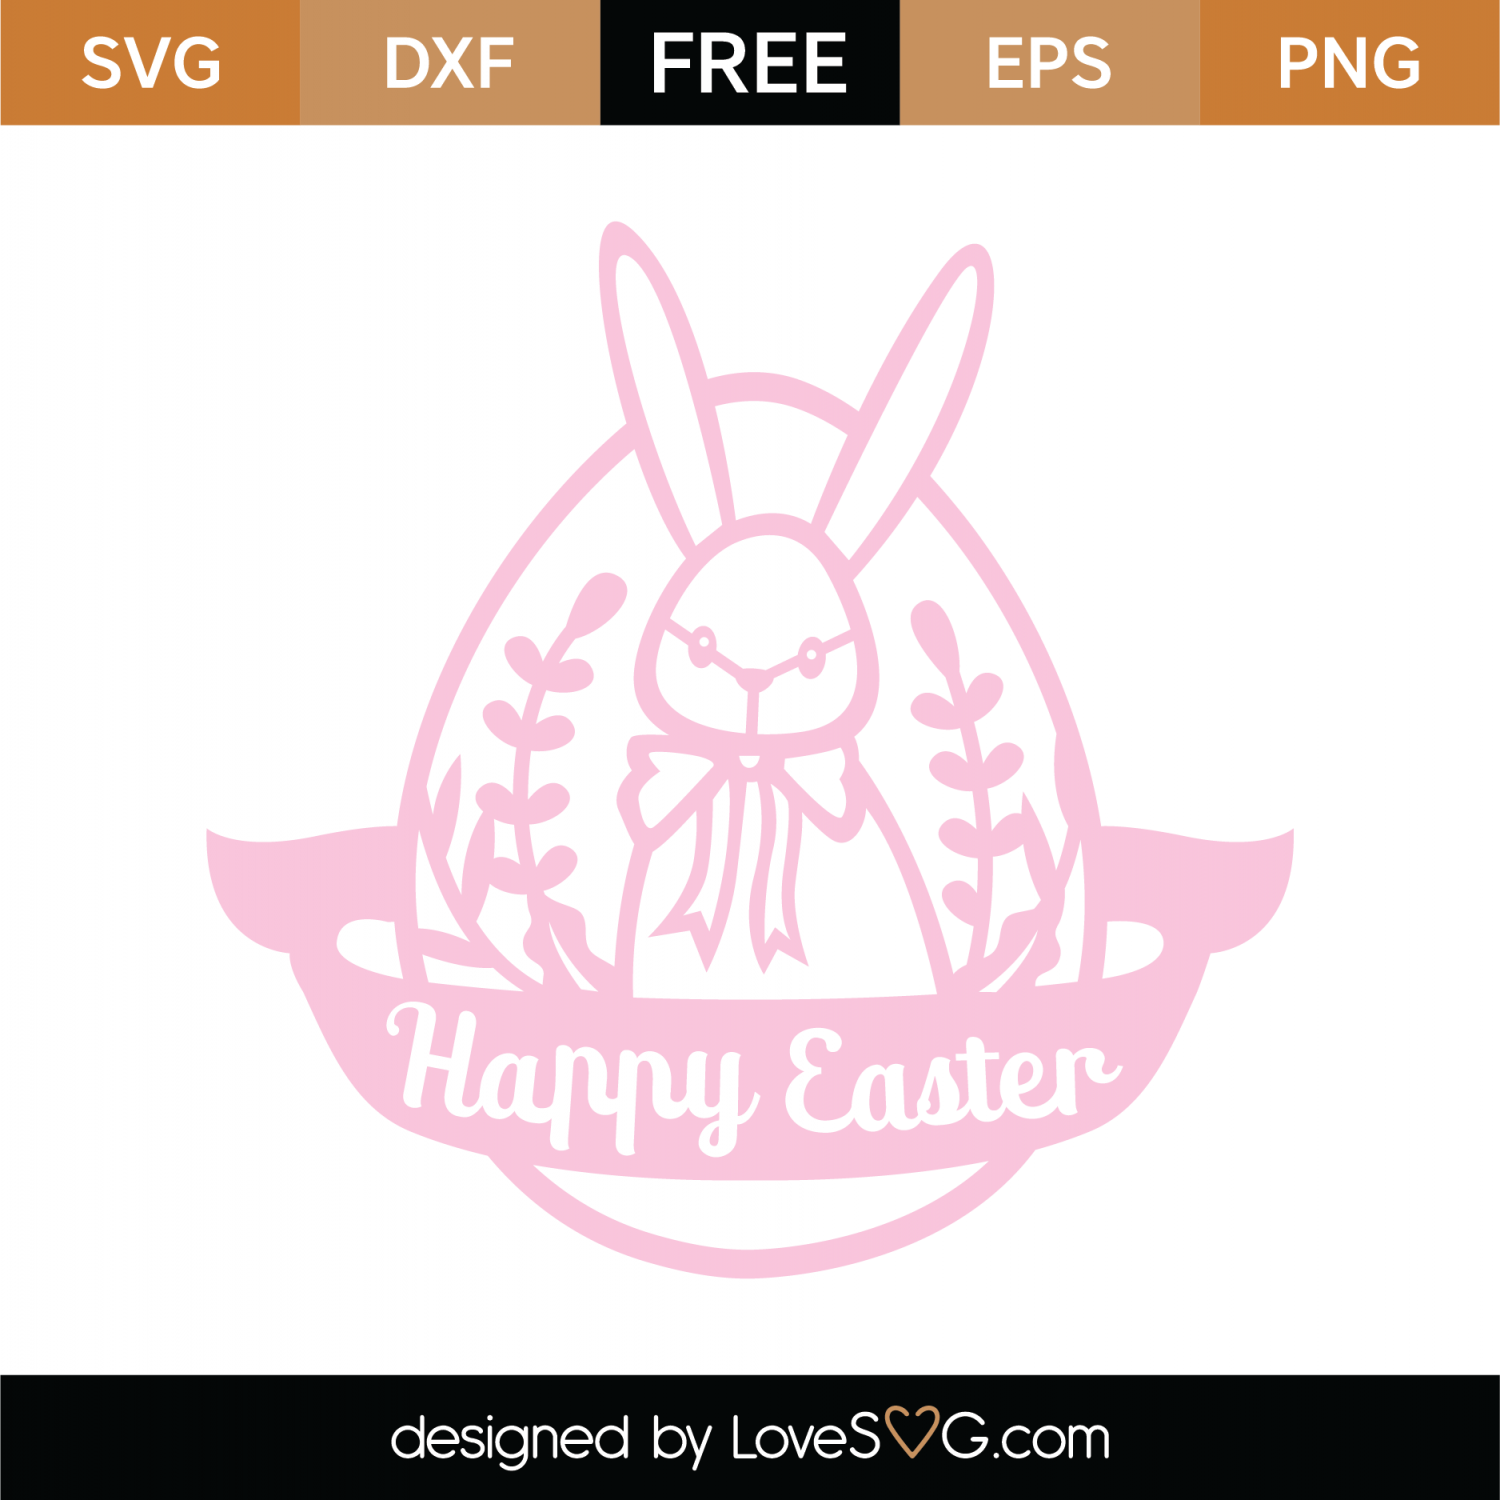 Free Happy Easter Monogram SVG Cut File | Lovesvg.com